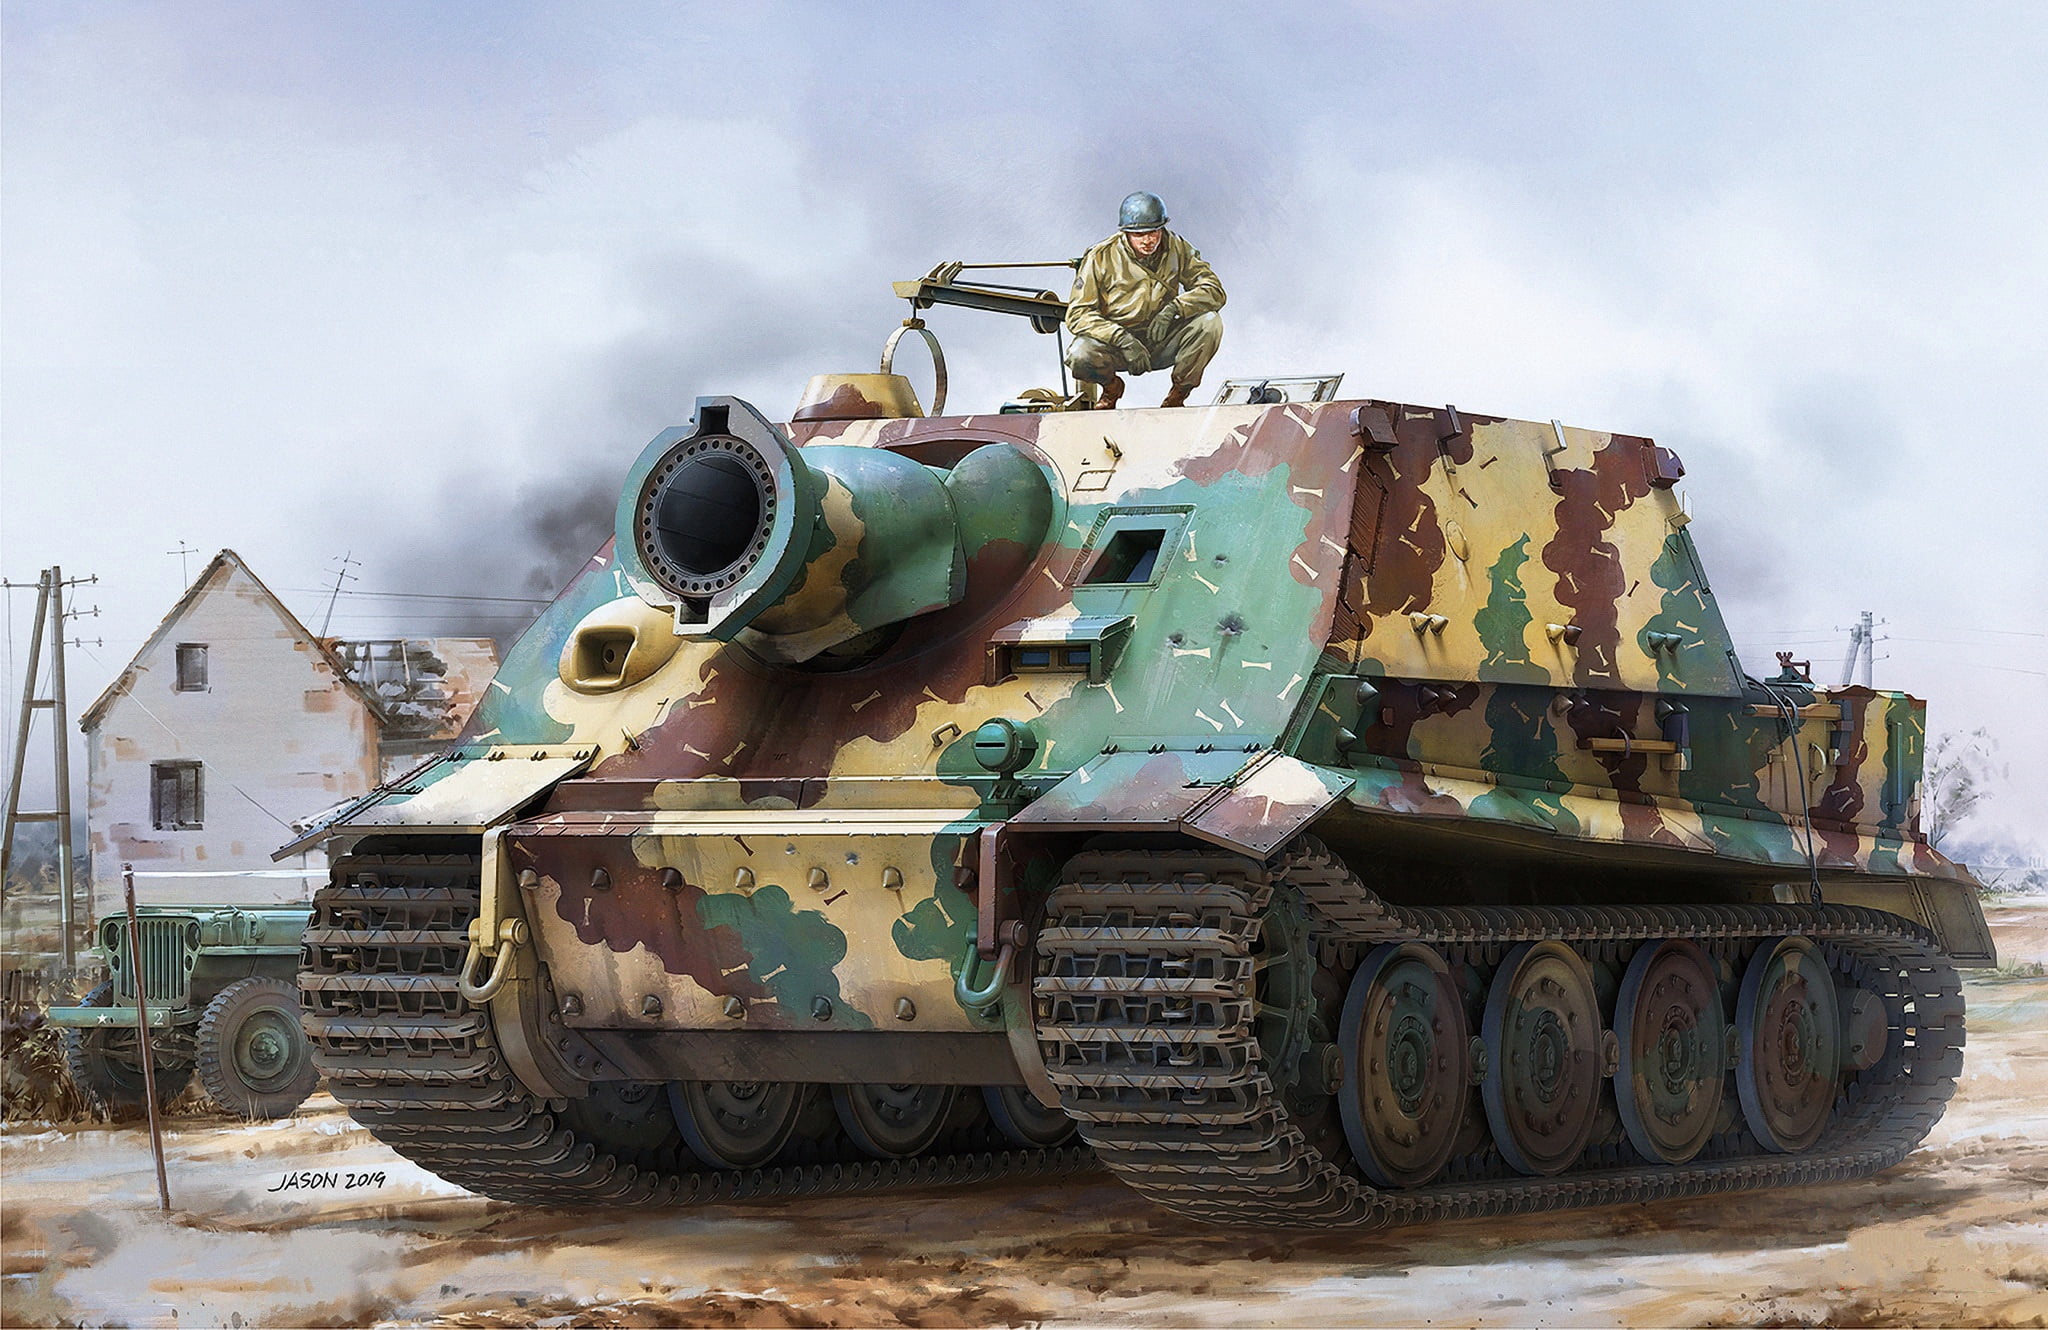 SAU, 38 cm RW61 on assault mortar Tiger, Shturmtigr, Storm Panzer VI